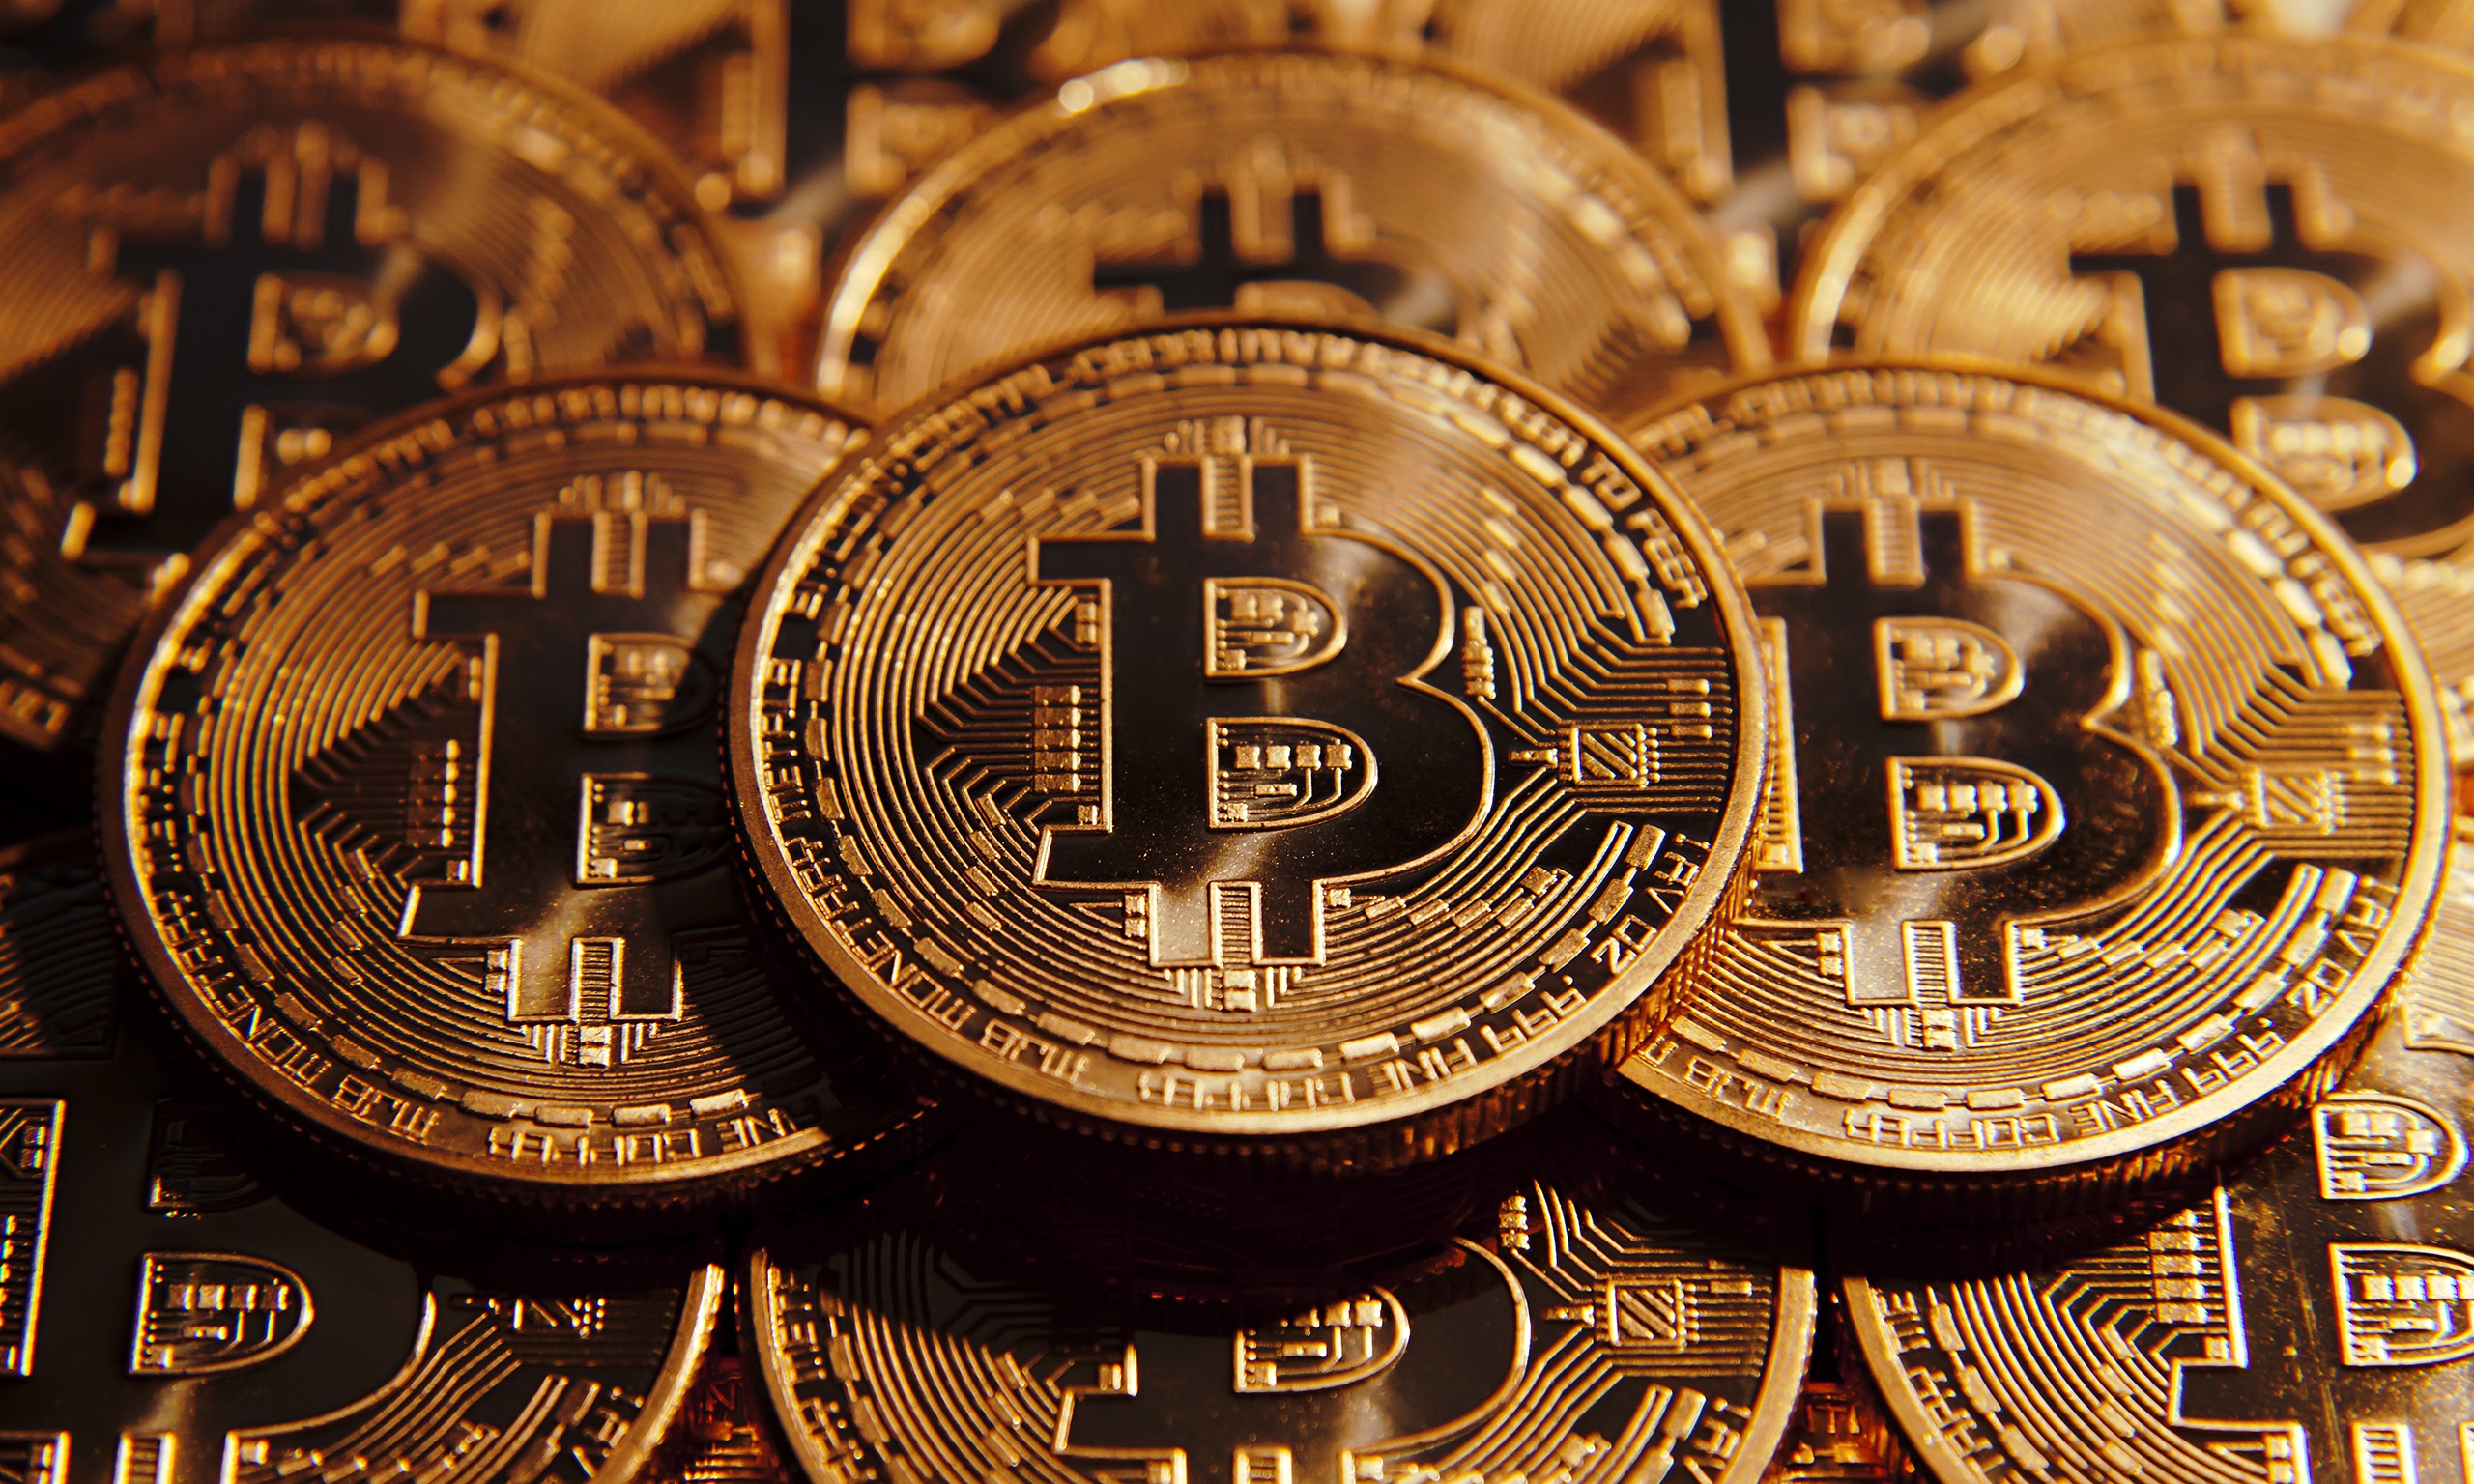 Bitcoin dips below $10,000